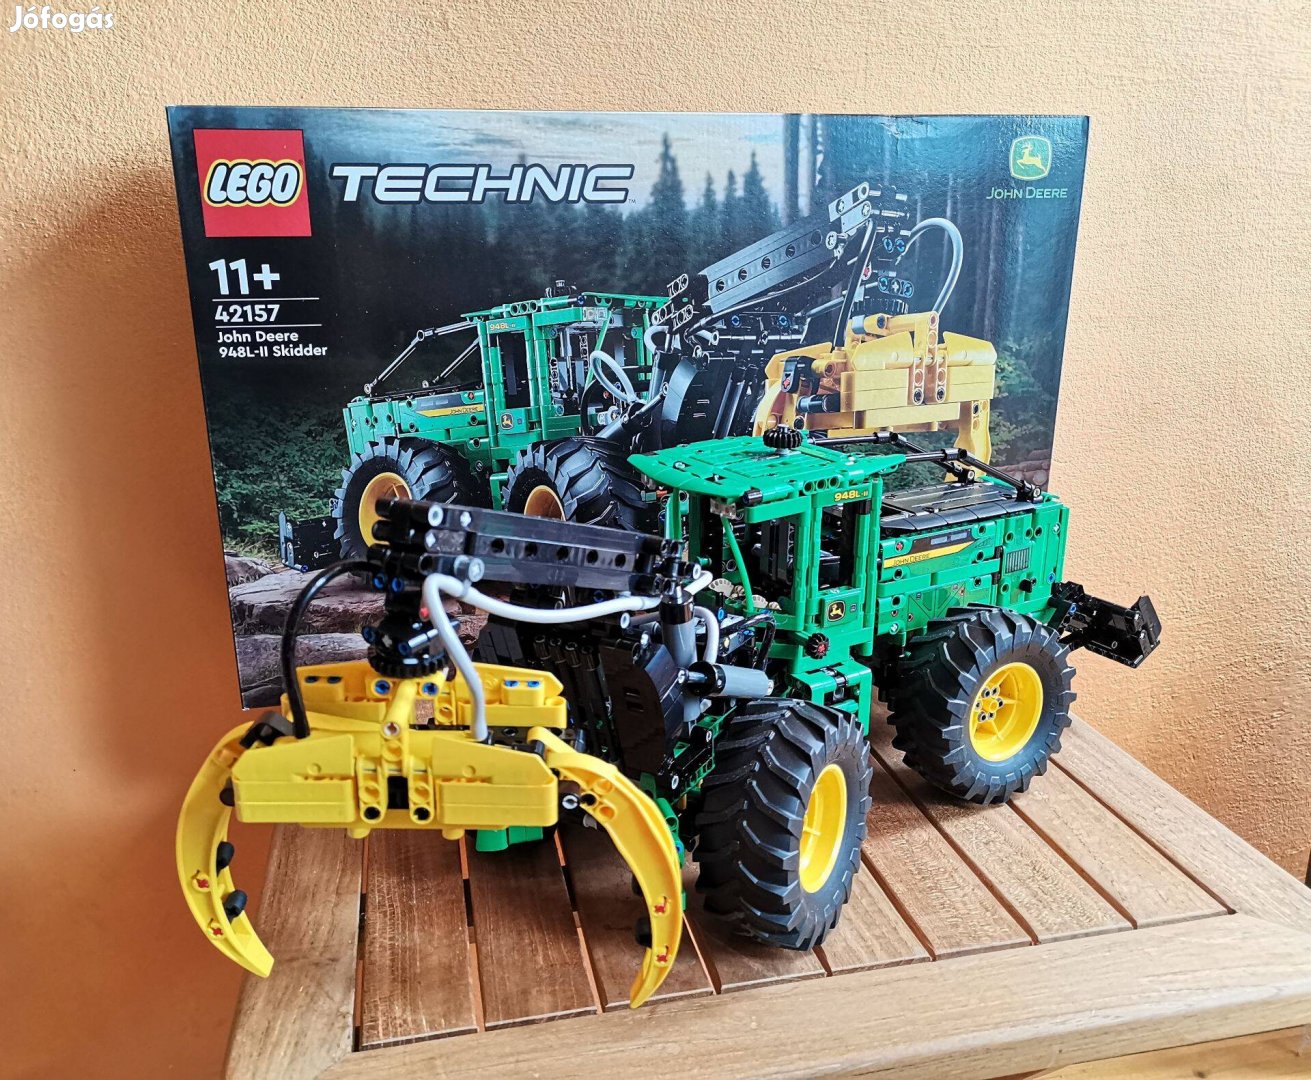 Lego technic 42157 John Deere 948l-ii skidder